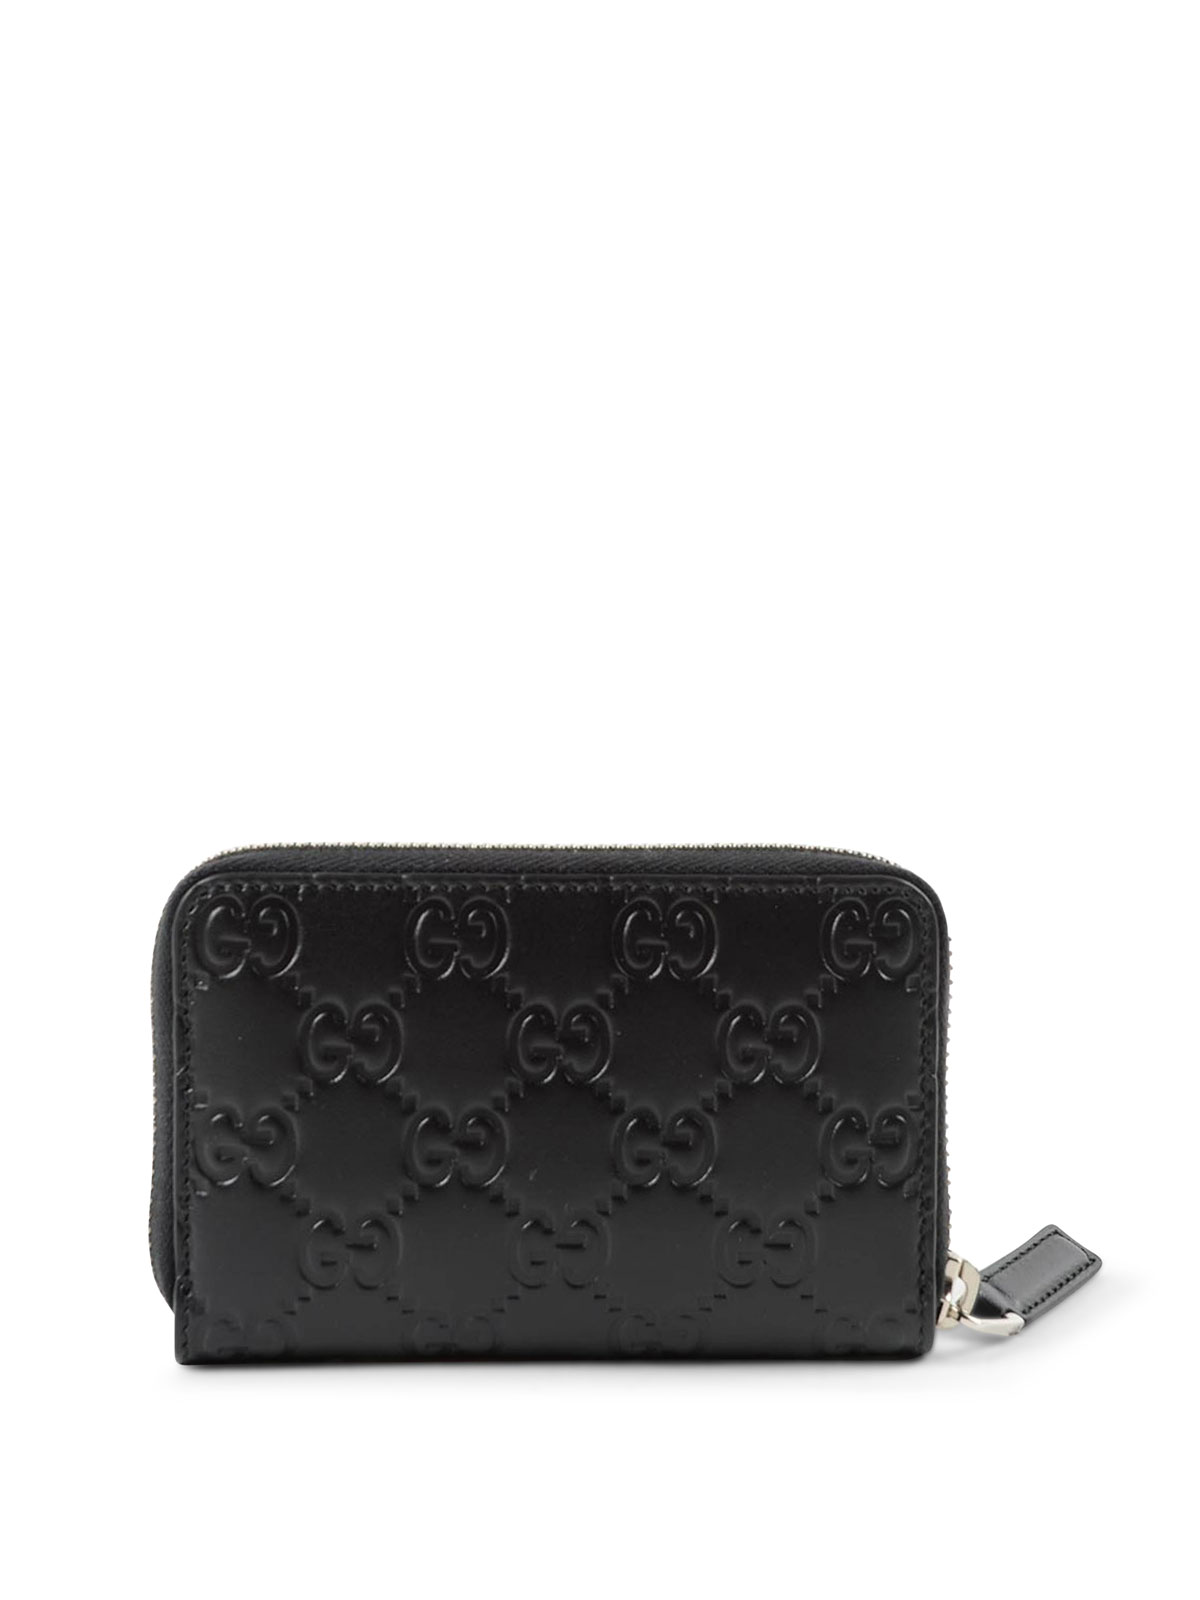 gucci signature card case wallet